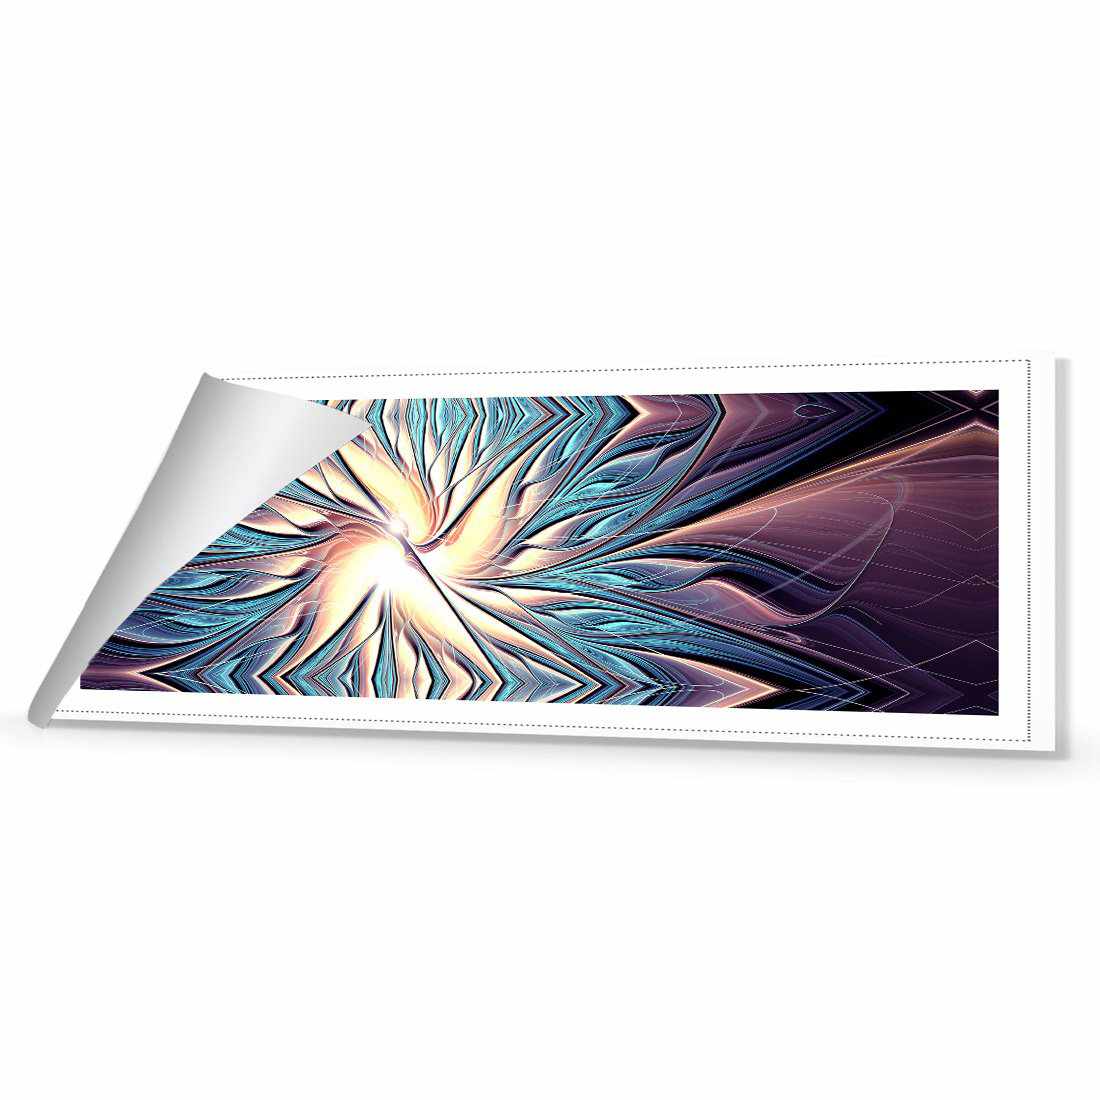 Shining Soul Canvas Art-Canvas-Wall Art Designs-60x20cm-Rolled Canvas-Wall Art Designs